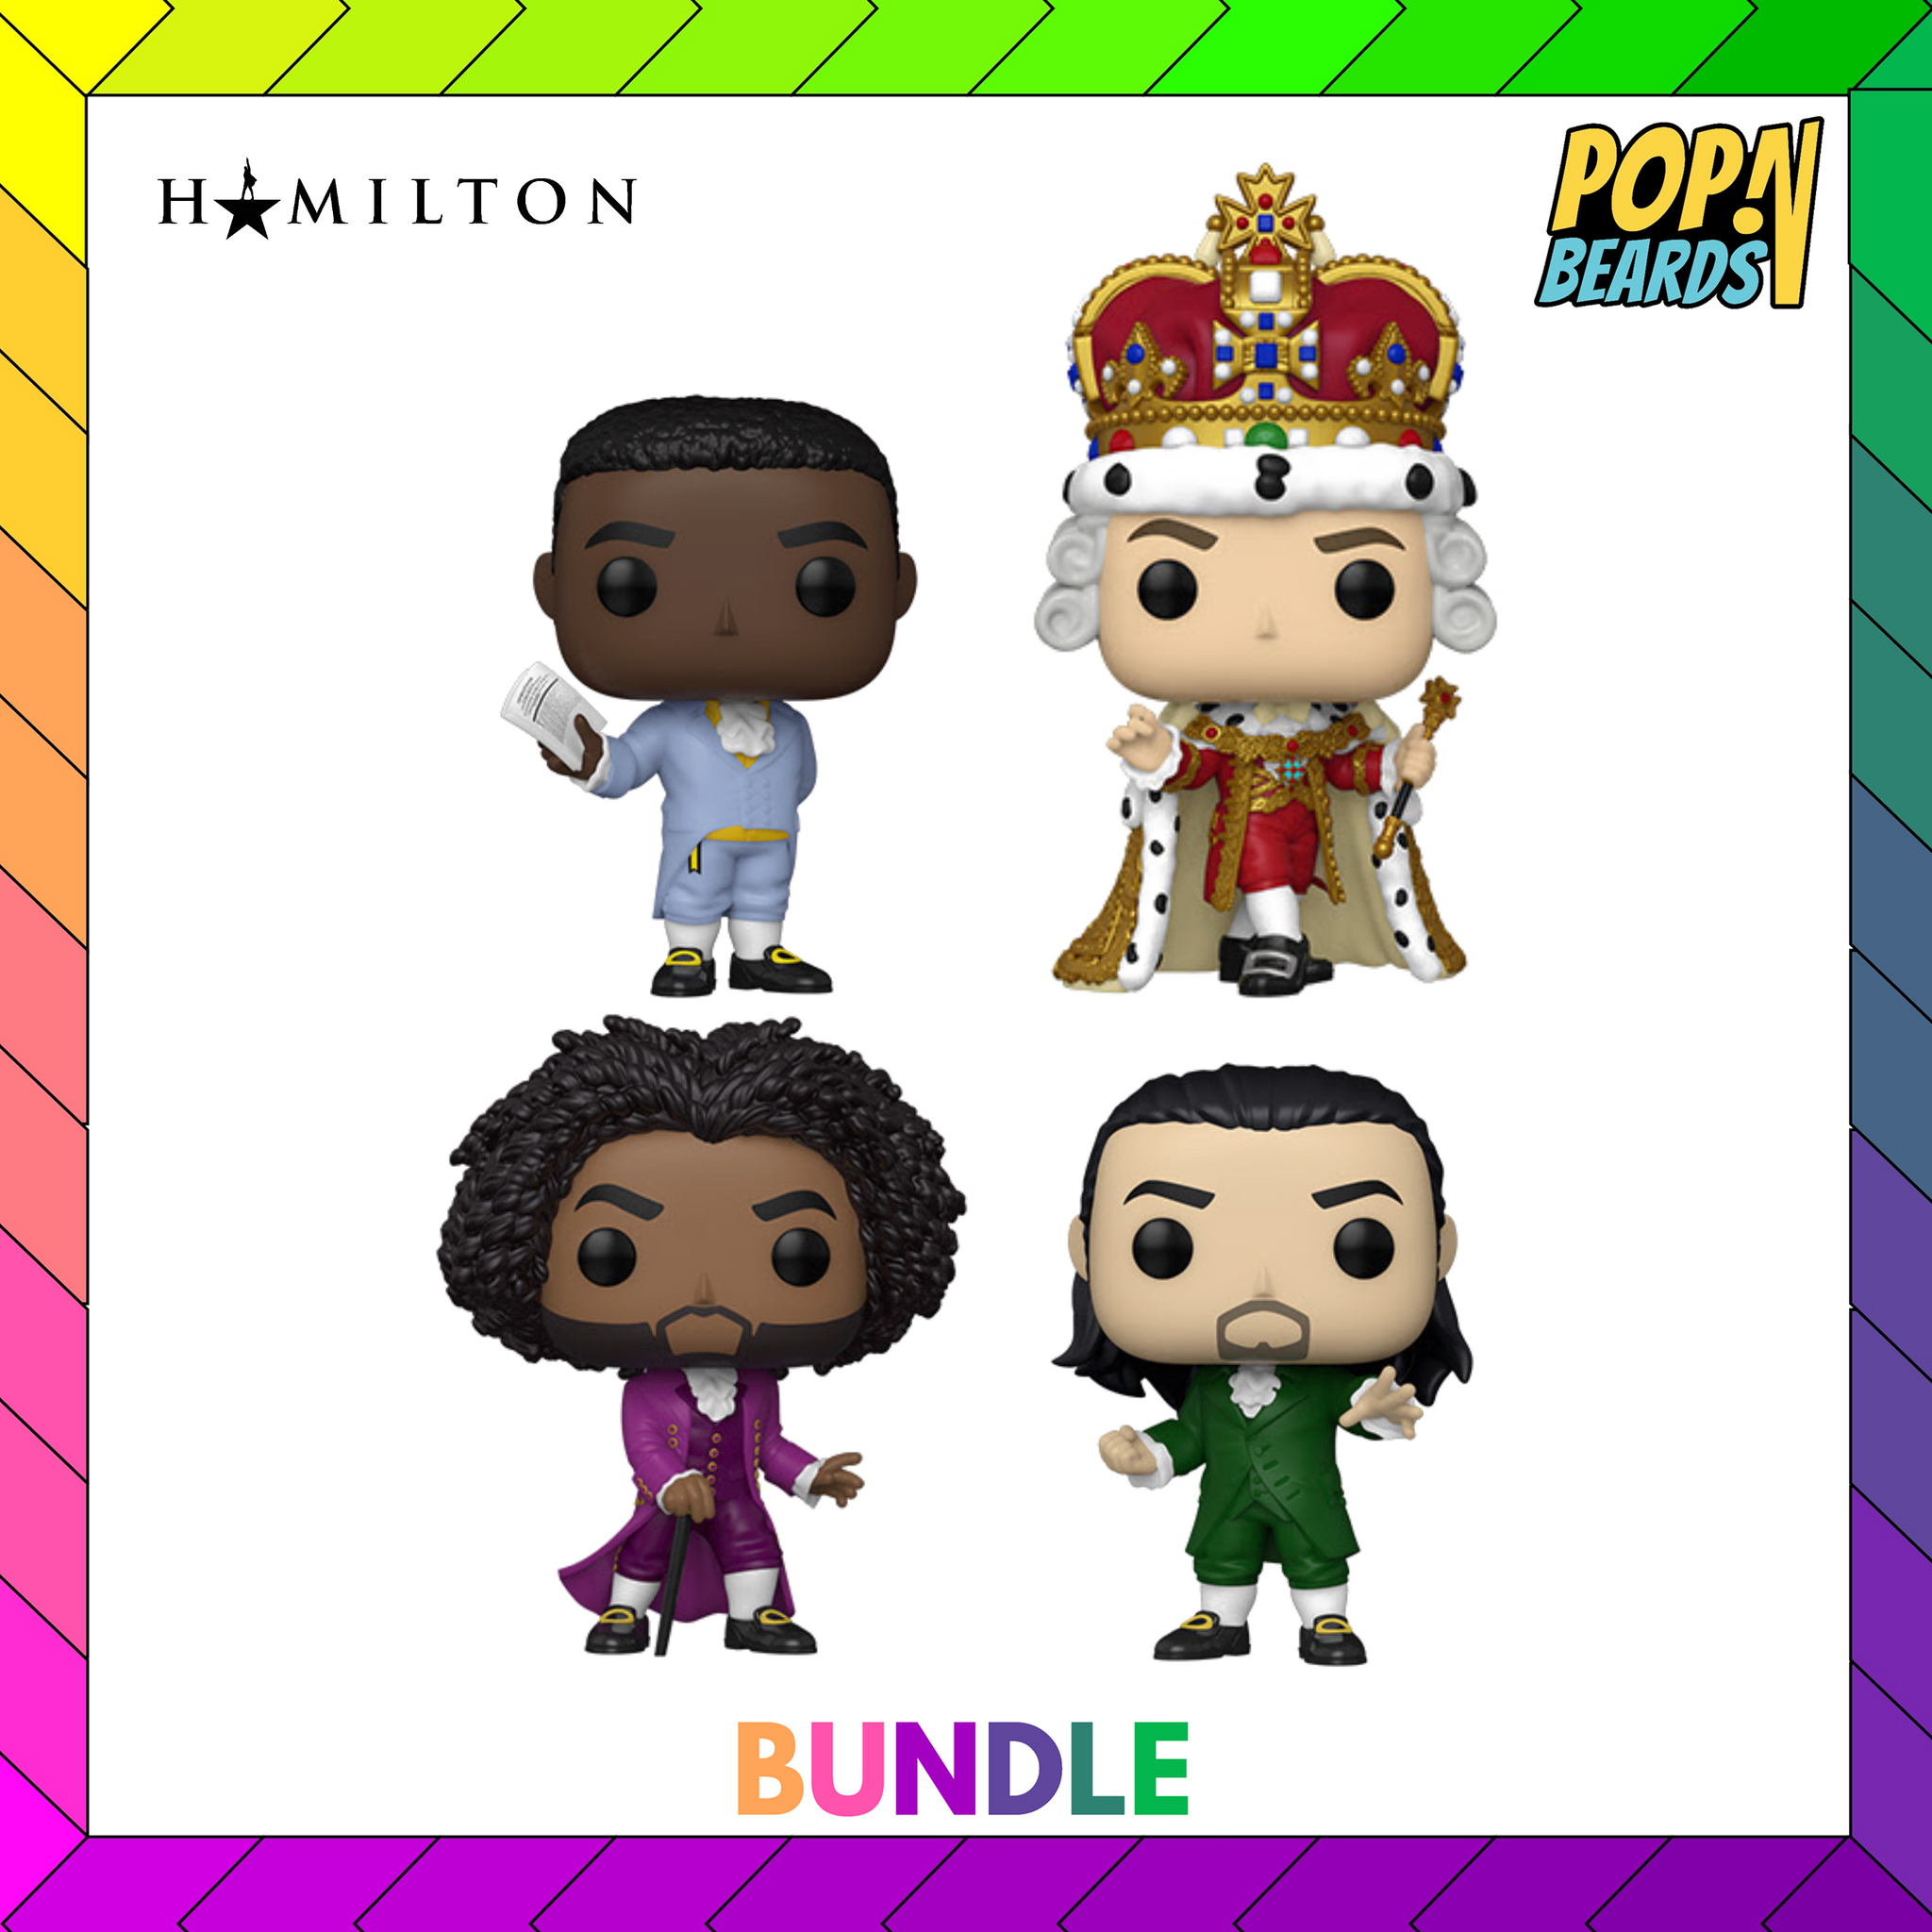 POP! Broadway: Hamilton (Bundle) – POPnBeards